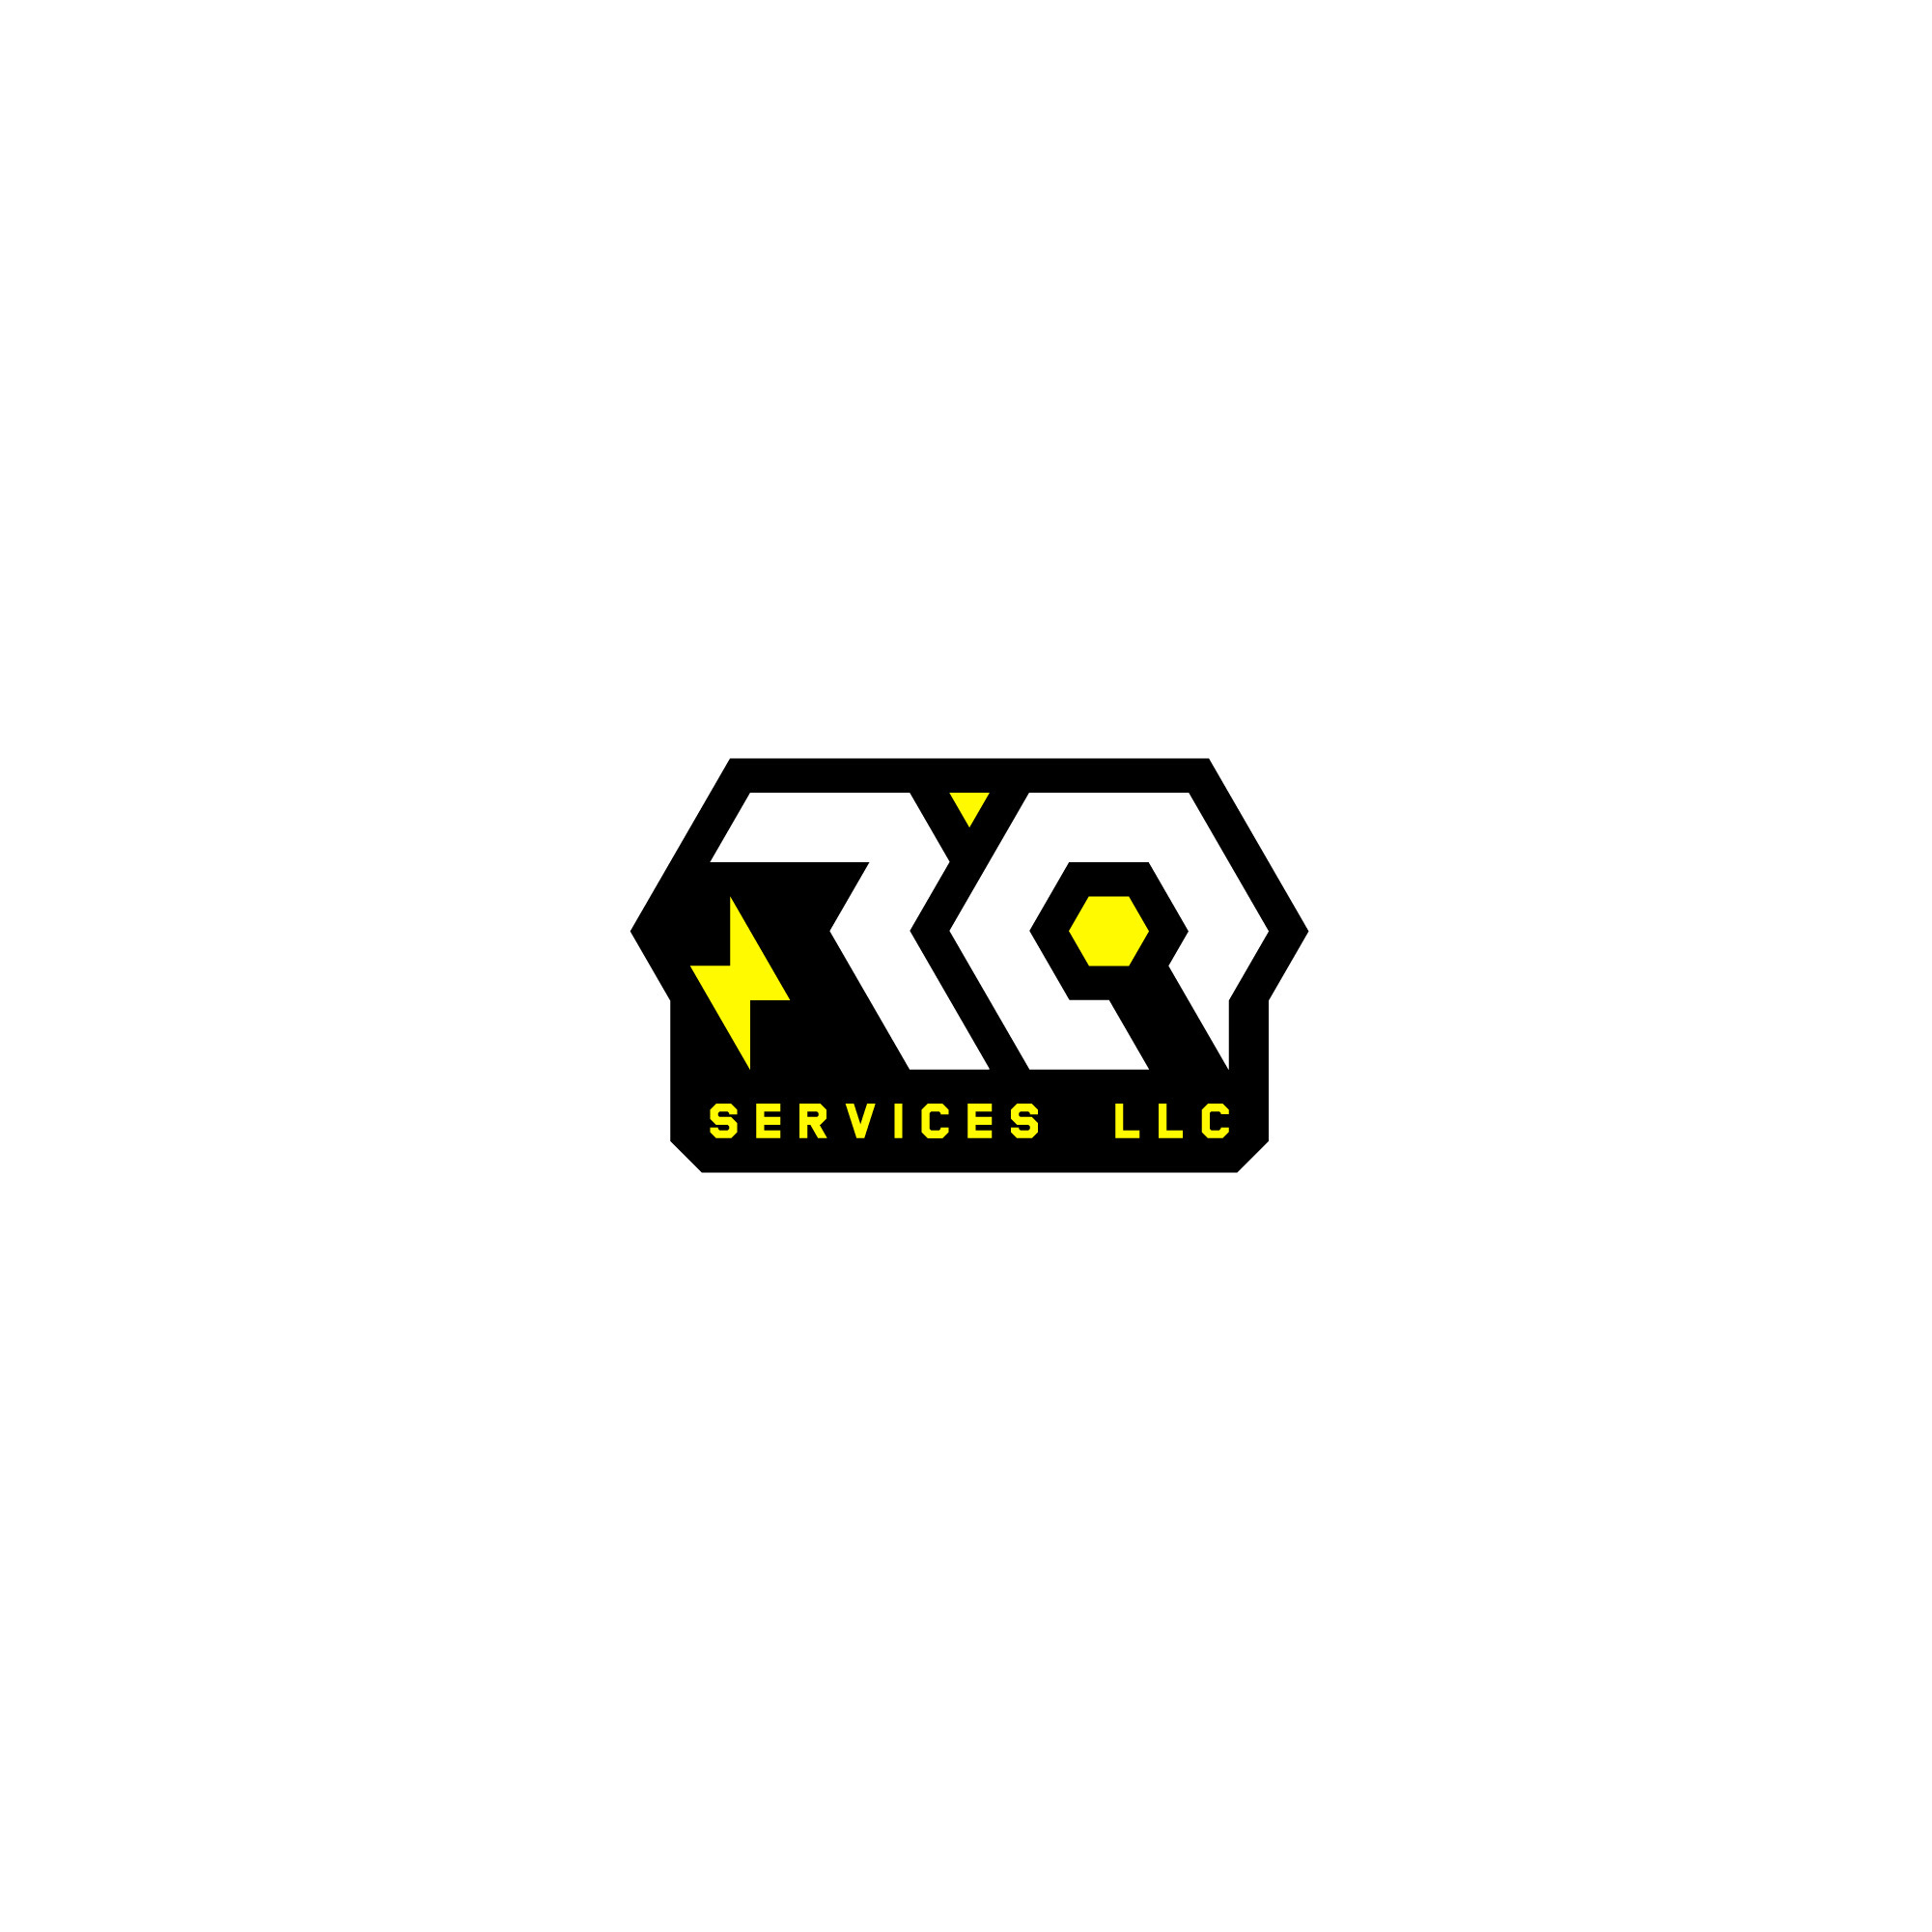 RQ's Services, LLC Logo